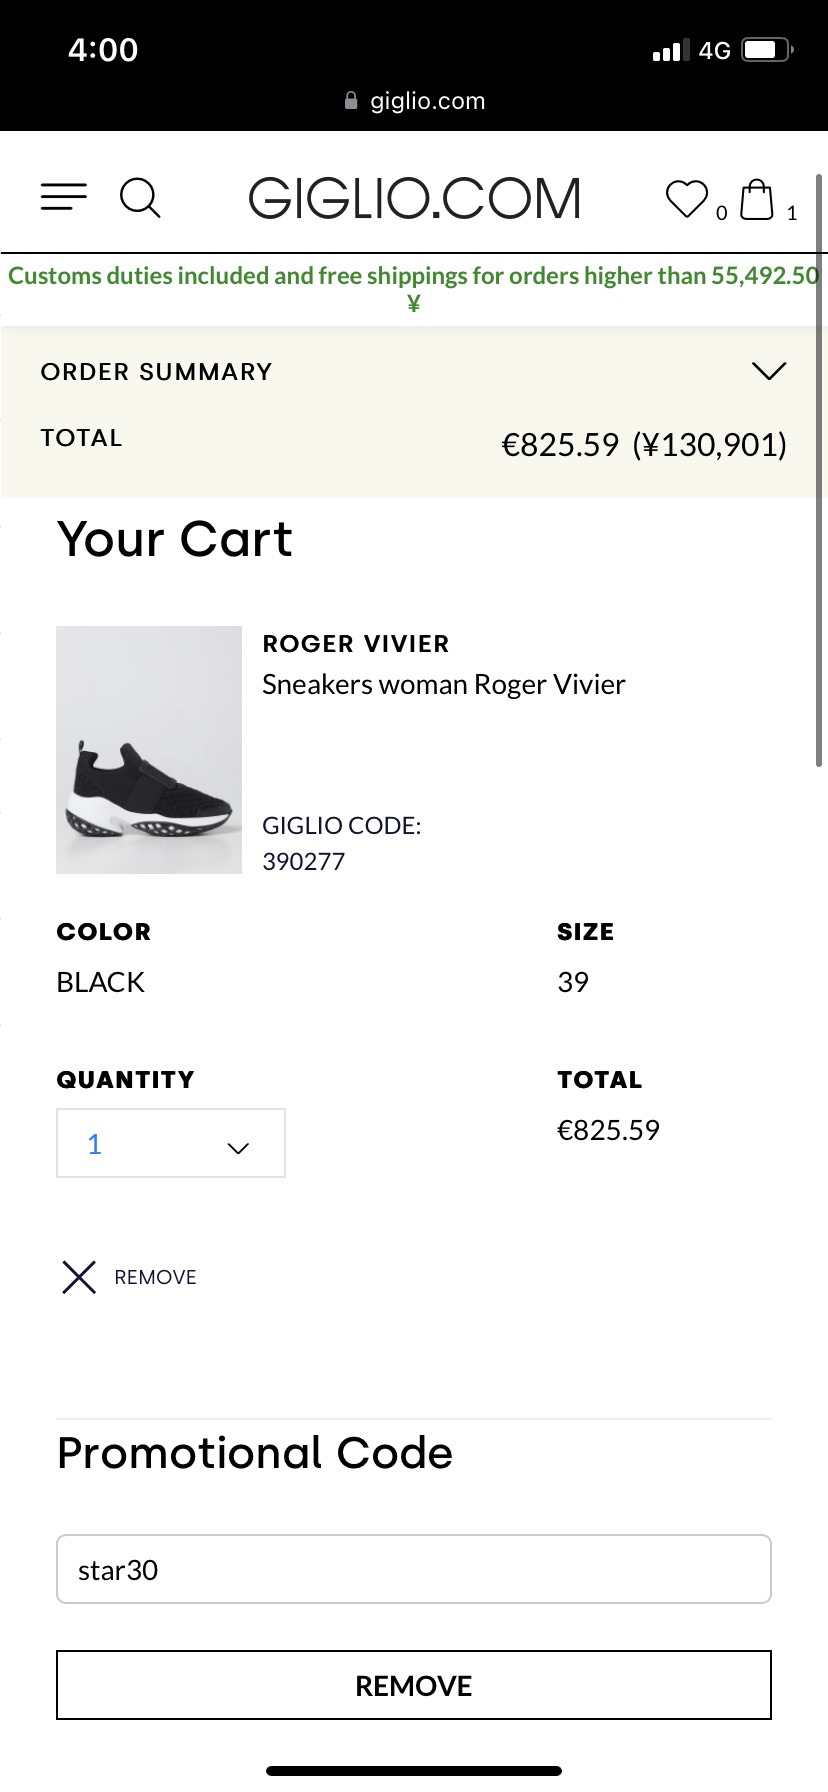 ROGER VIVIER
Sneakers woman Roger Vivier